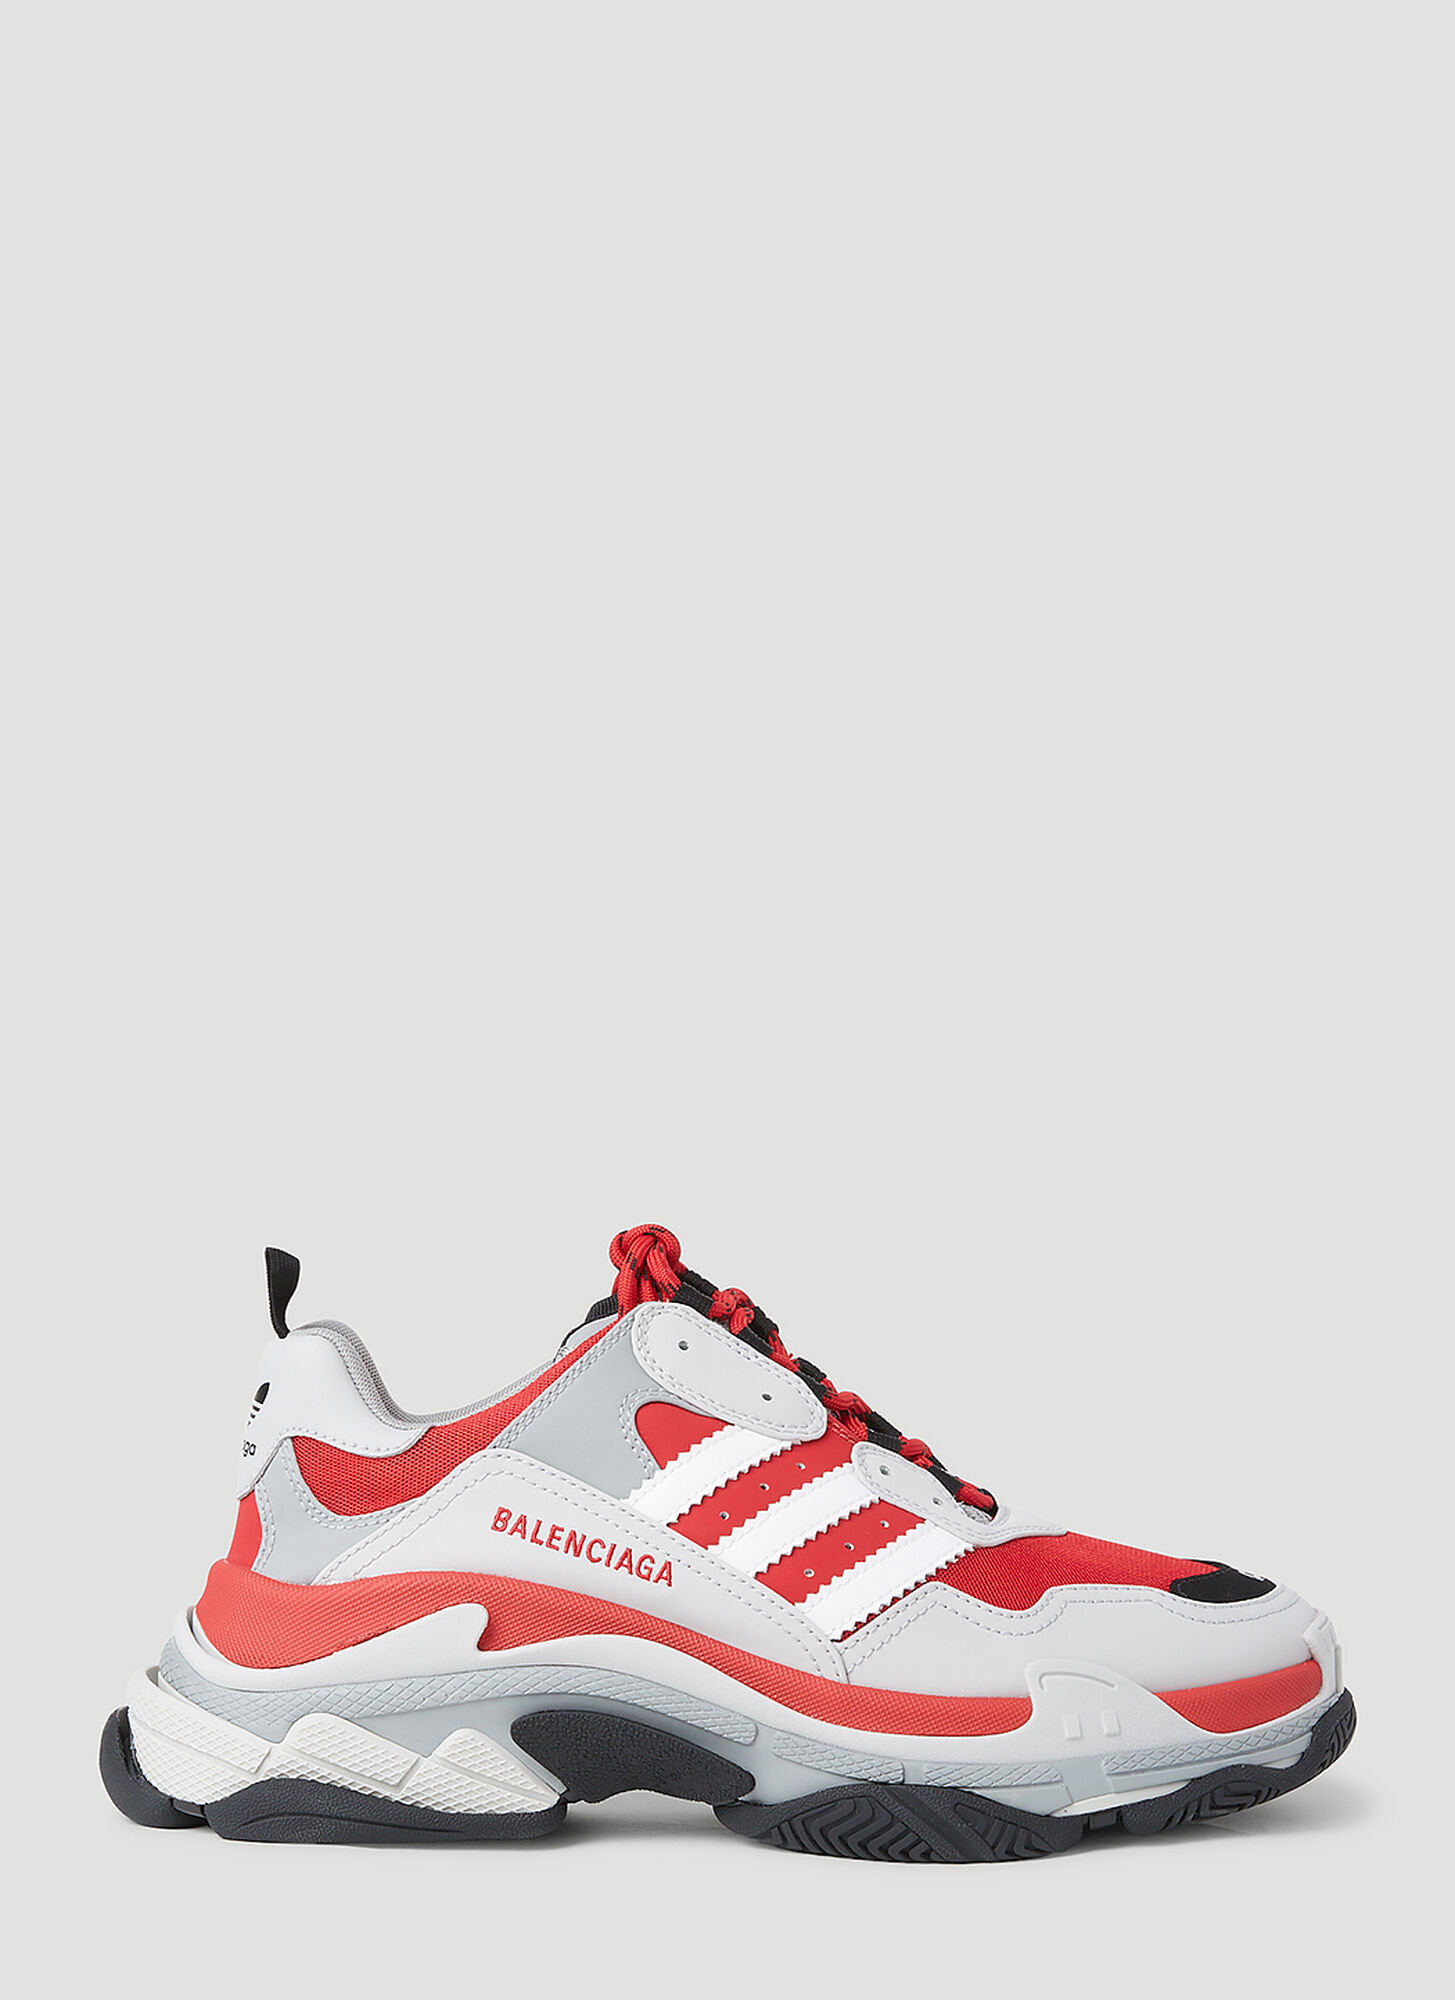 Adidas X Balenciaga Triple S Sneakers In Red